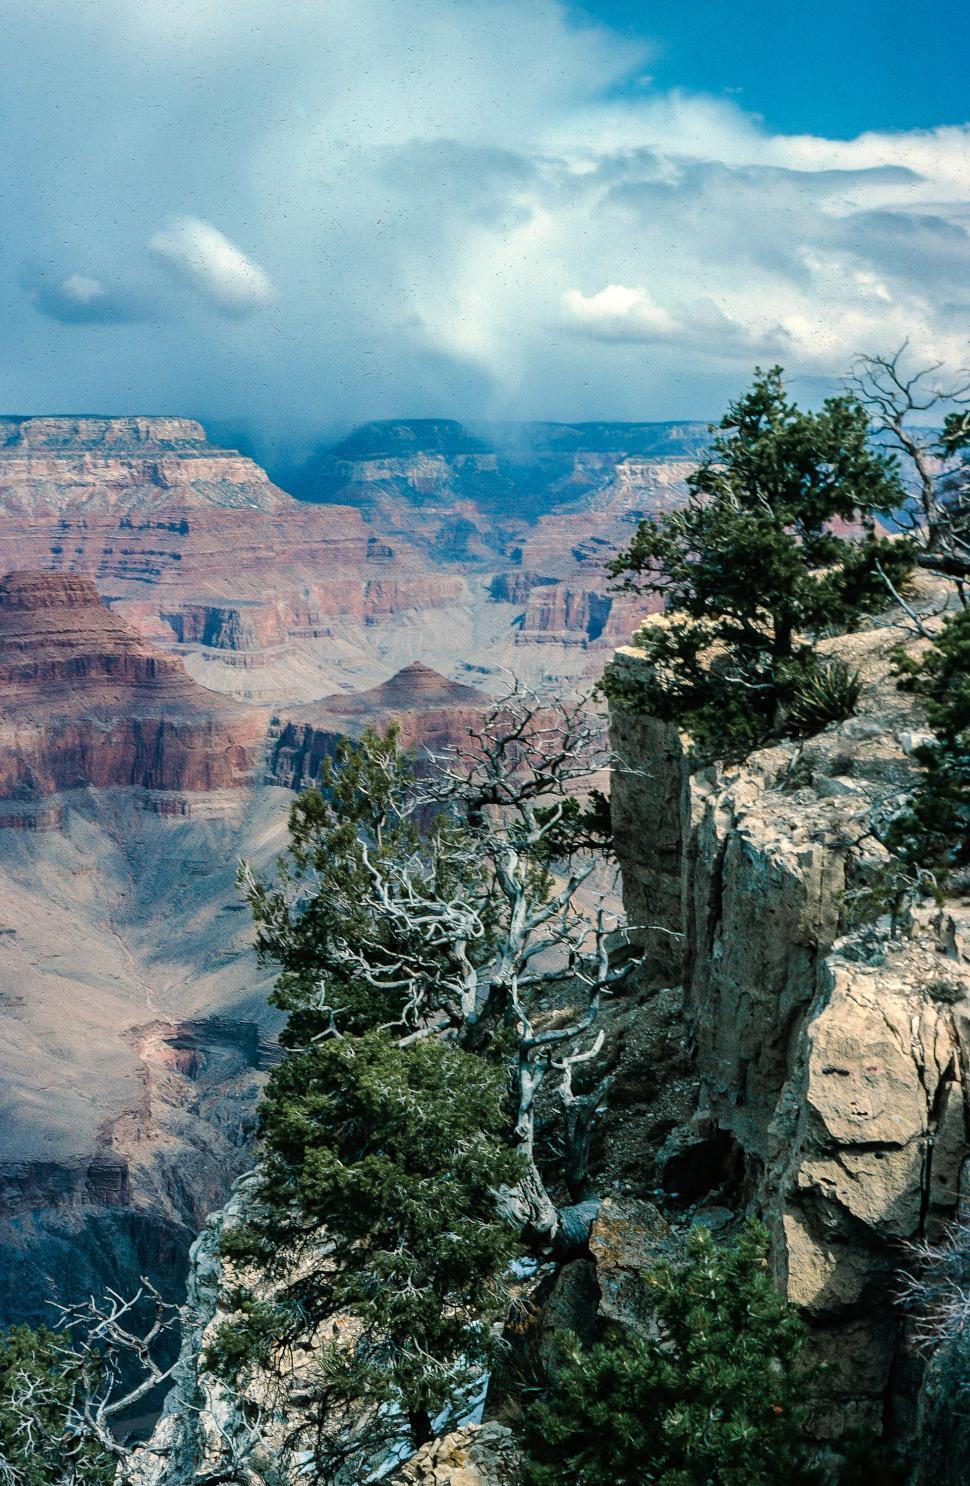 Free Image of View of Grand Canyon National Park, Arizona 